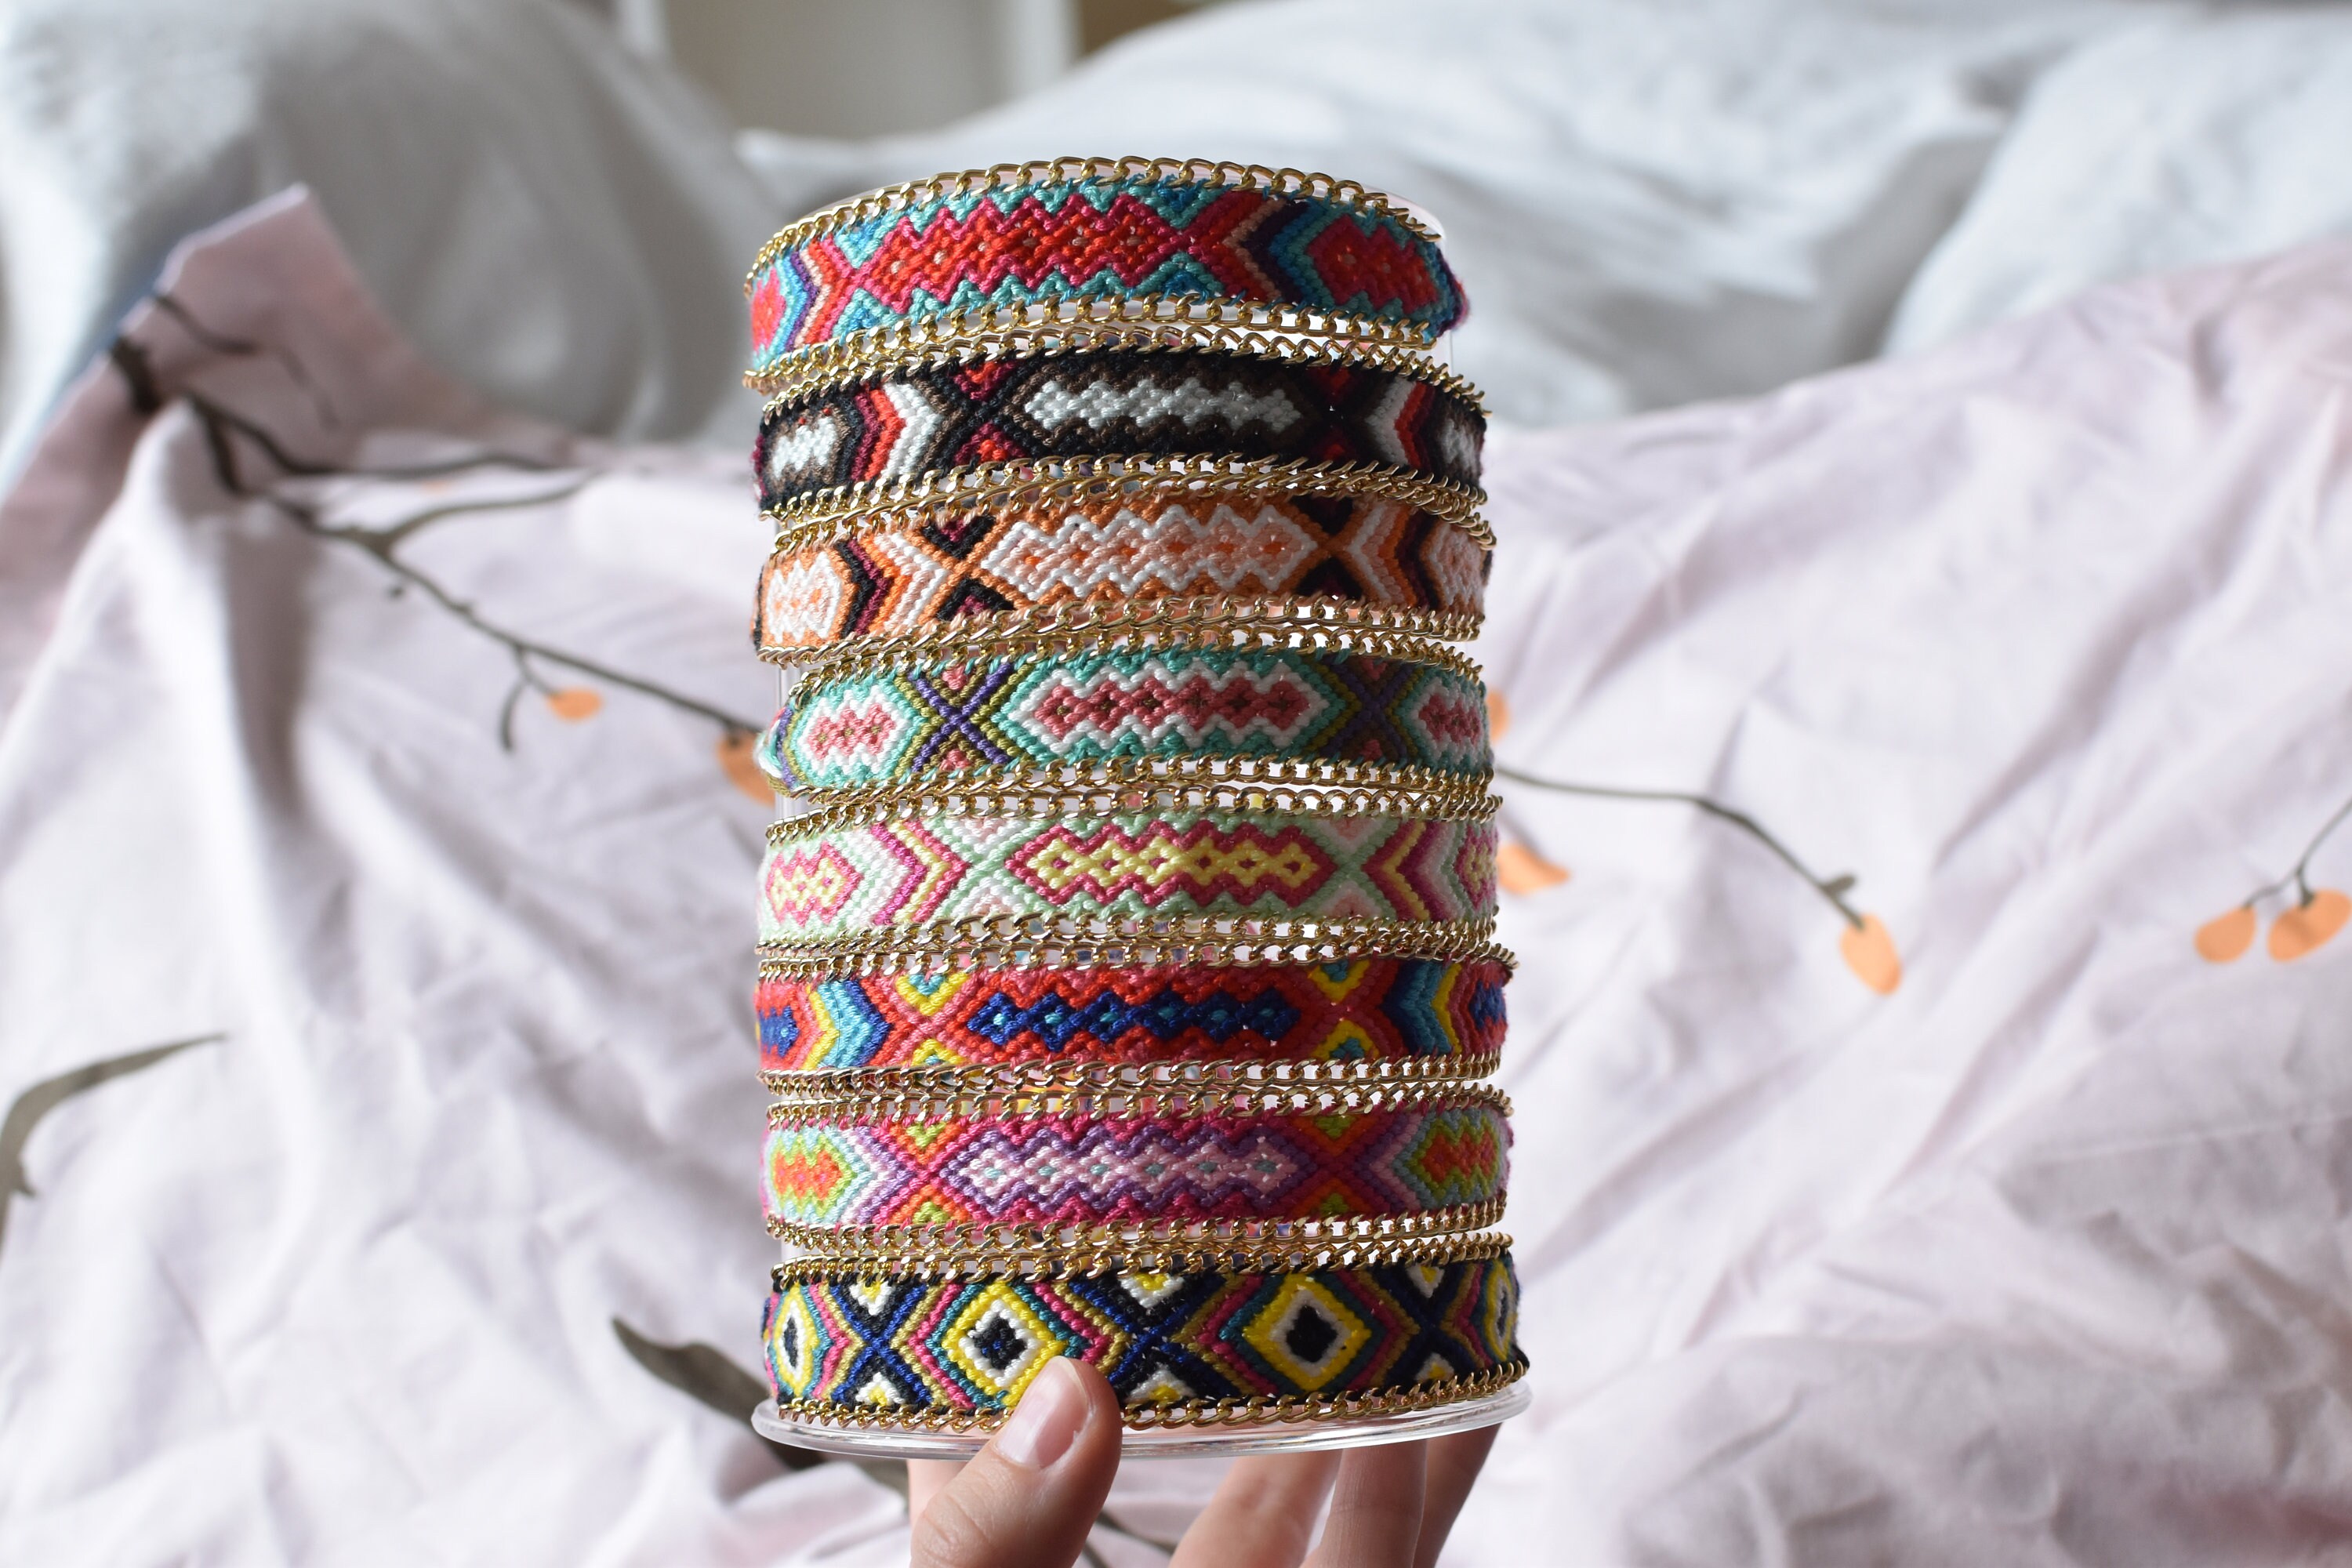 Christian Dior Friendship Bracelets – Dina C's Fab and Funky